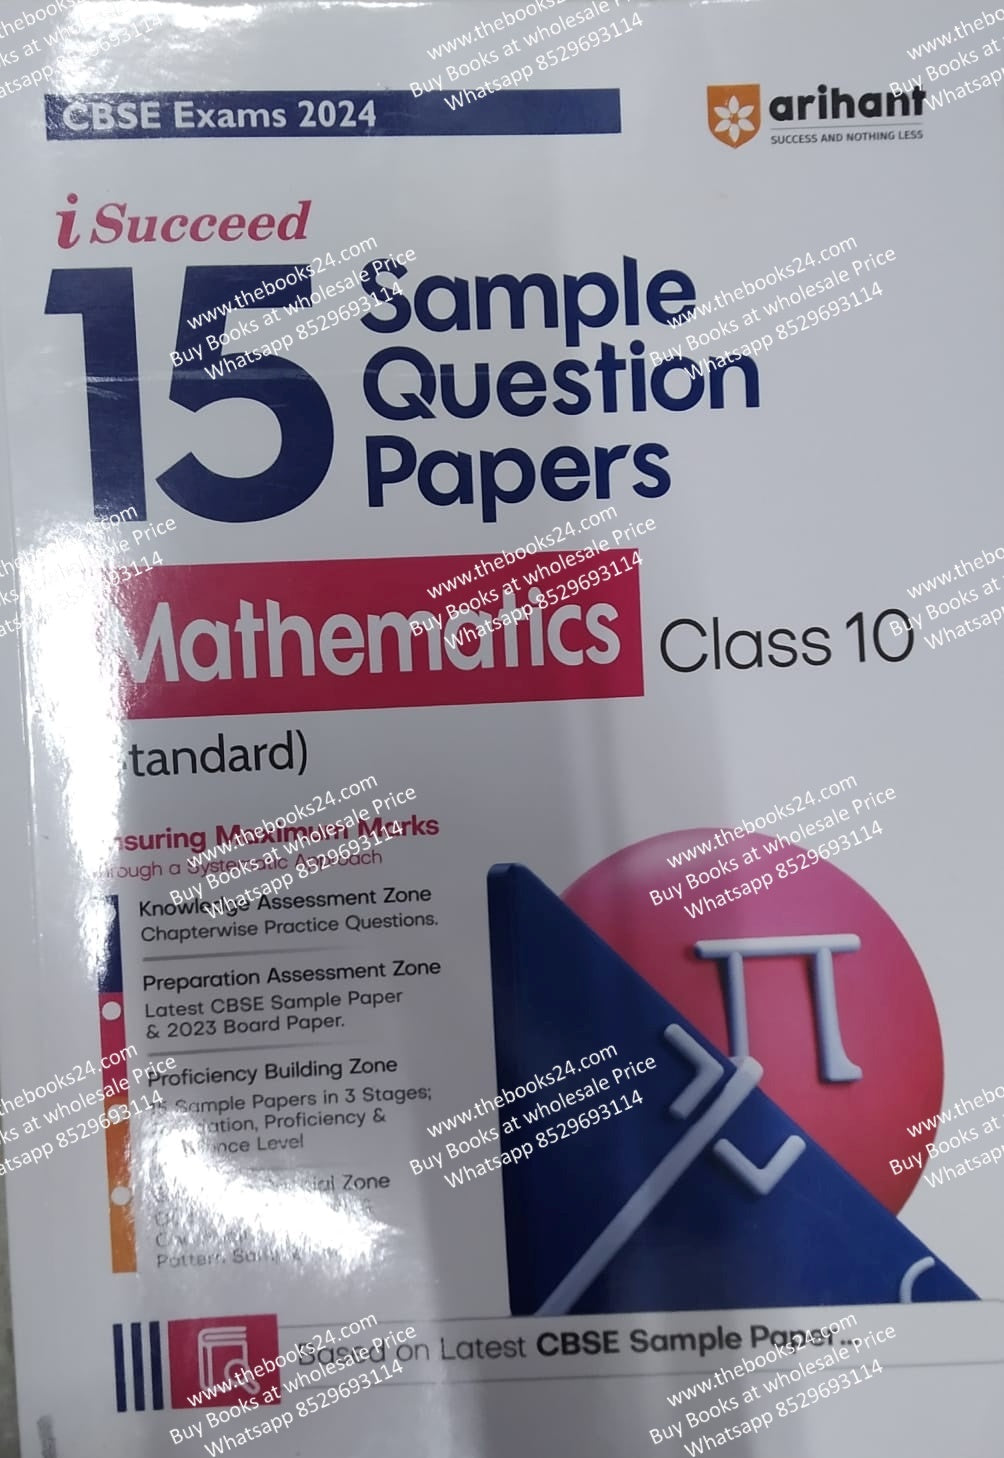 Arihant I-Succeed 15 Sample Question Papers Mathematics (Standard)  Class-10